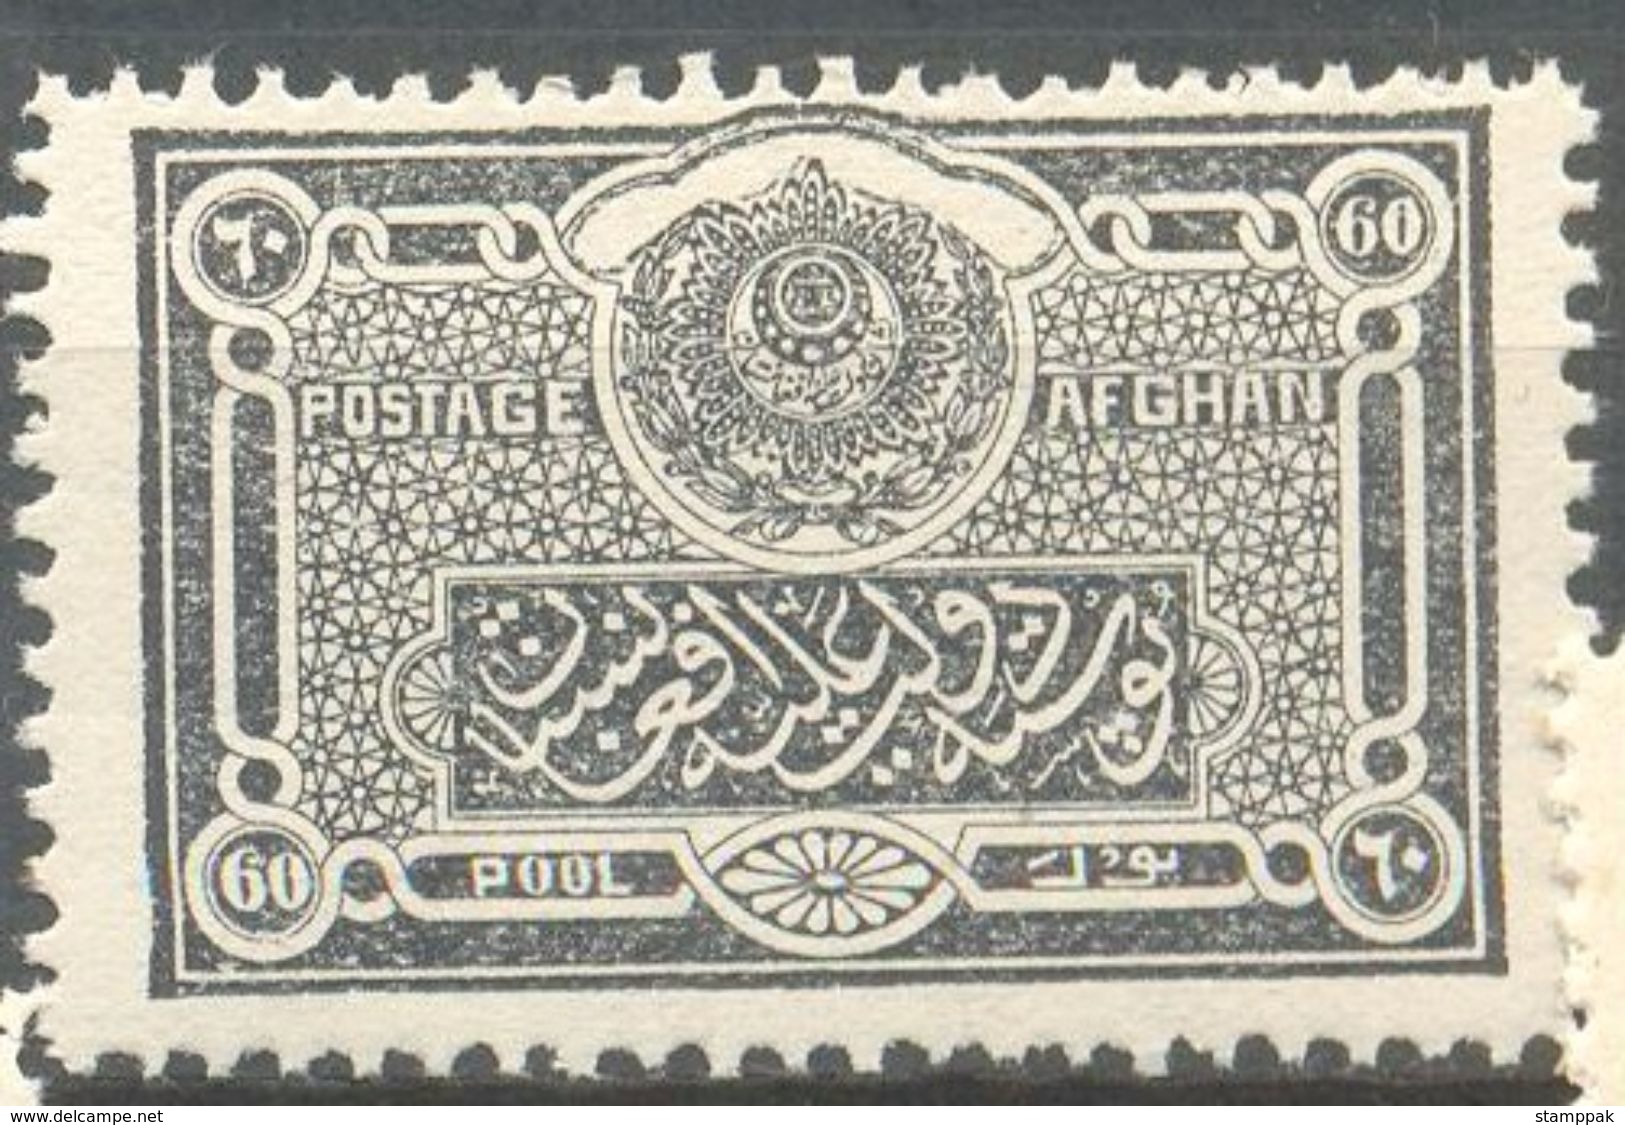 AFGHANISTAN: Scott 235,1927,MNH - Afghanistan